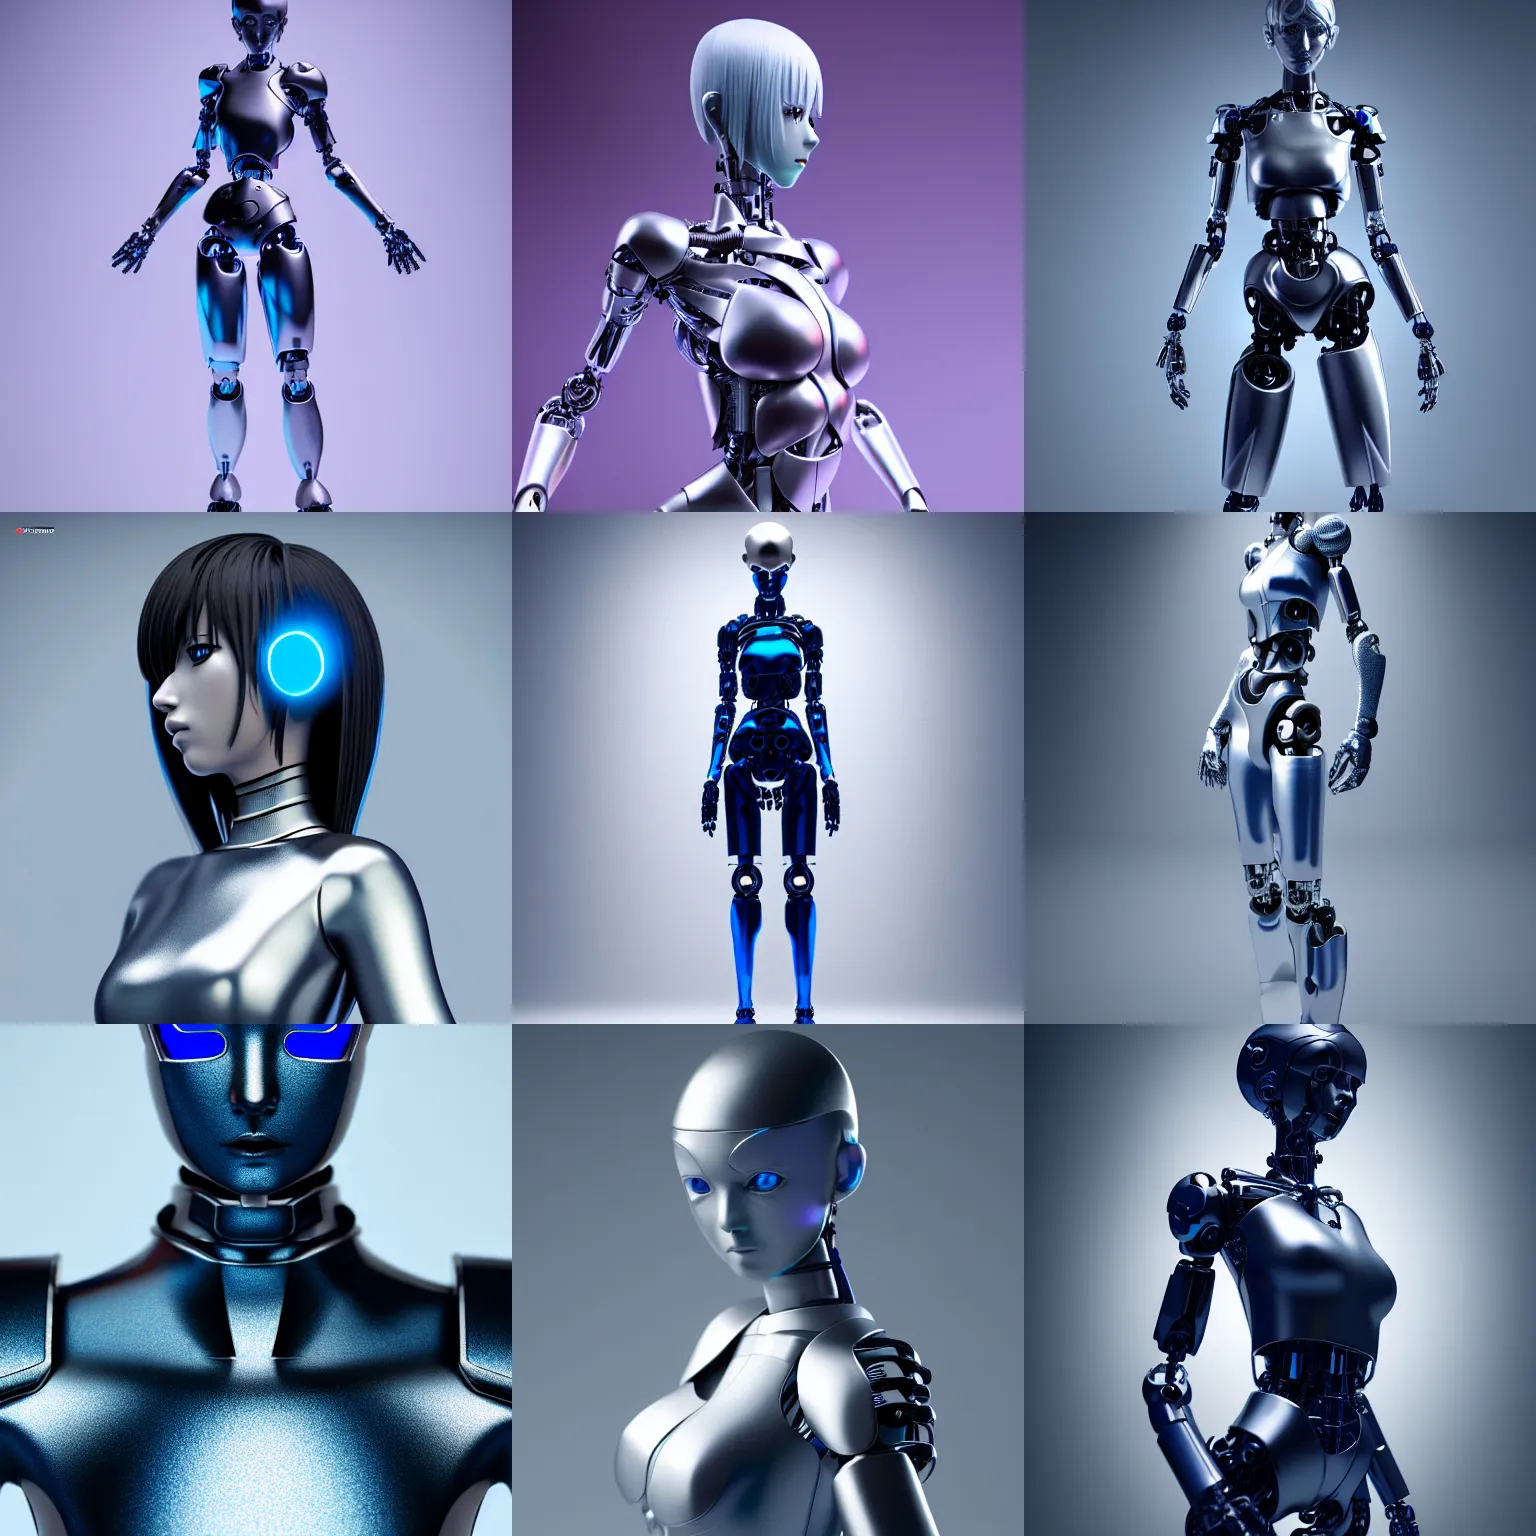 Prompt: anime humanoid cyborg, porcelain, aluminium ( desgined by apple ), silver, blue soft details, soft!!, dark black dress, studio photo, octane render, studio lights, 8 0 mm lens